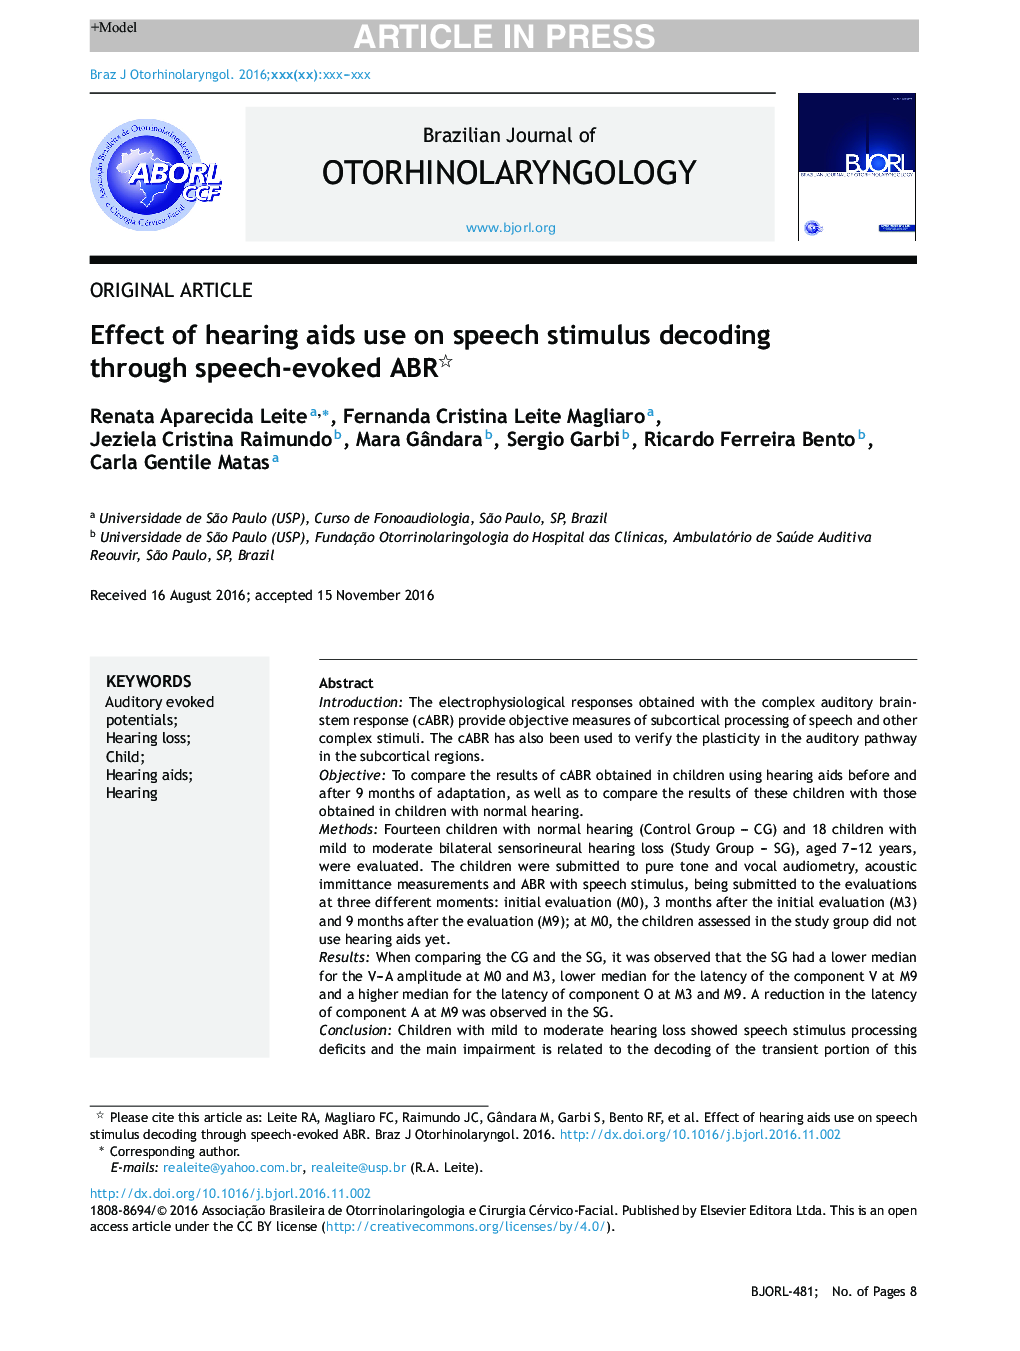 Effect of hearing aids use on speech stimulus decoding through speech-evoked ABR